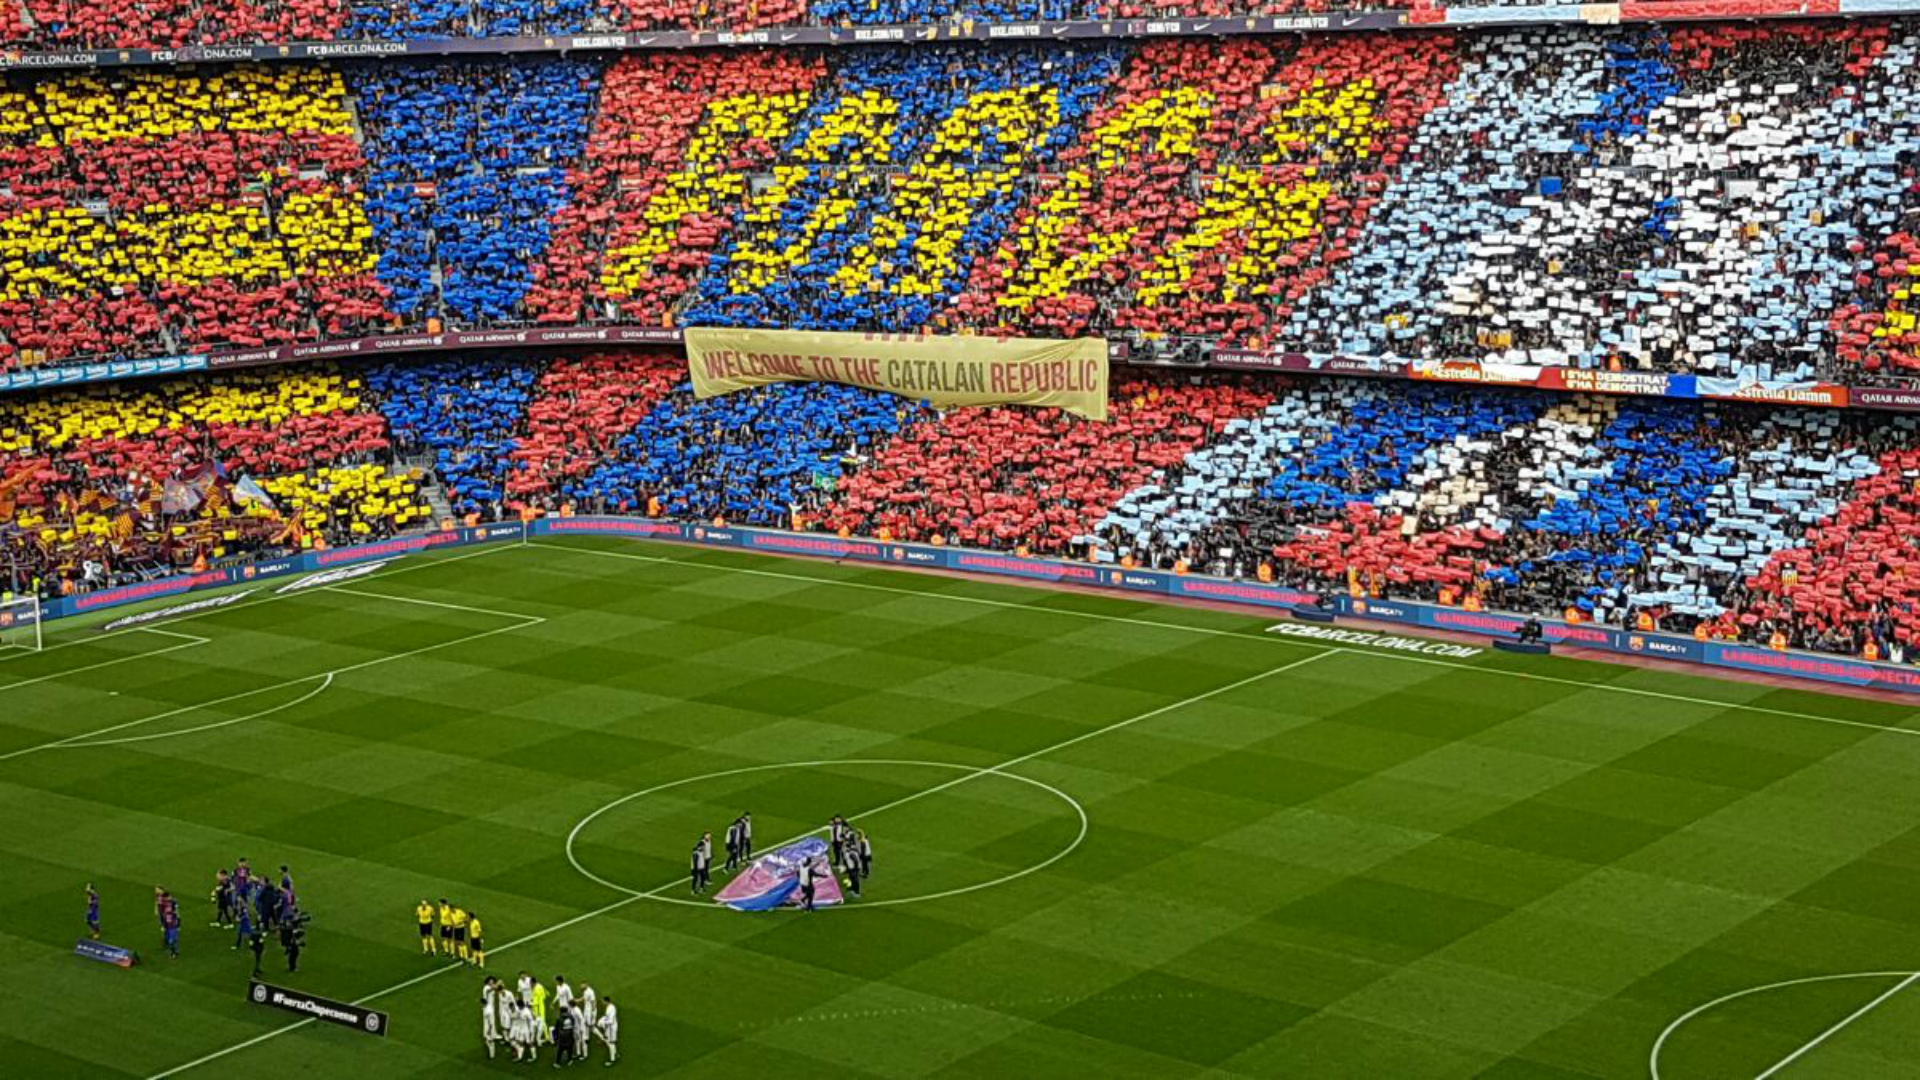 Camp Nou Barcelona Real Madrid La Liga - Goal.com1920 x 1080